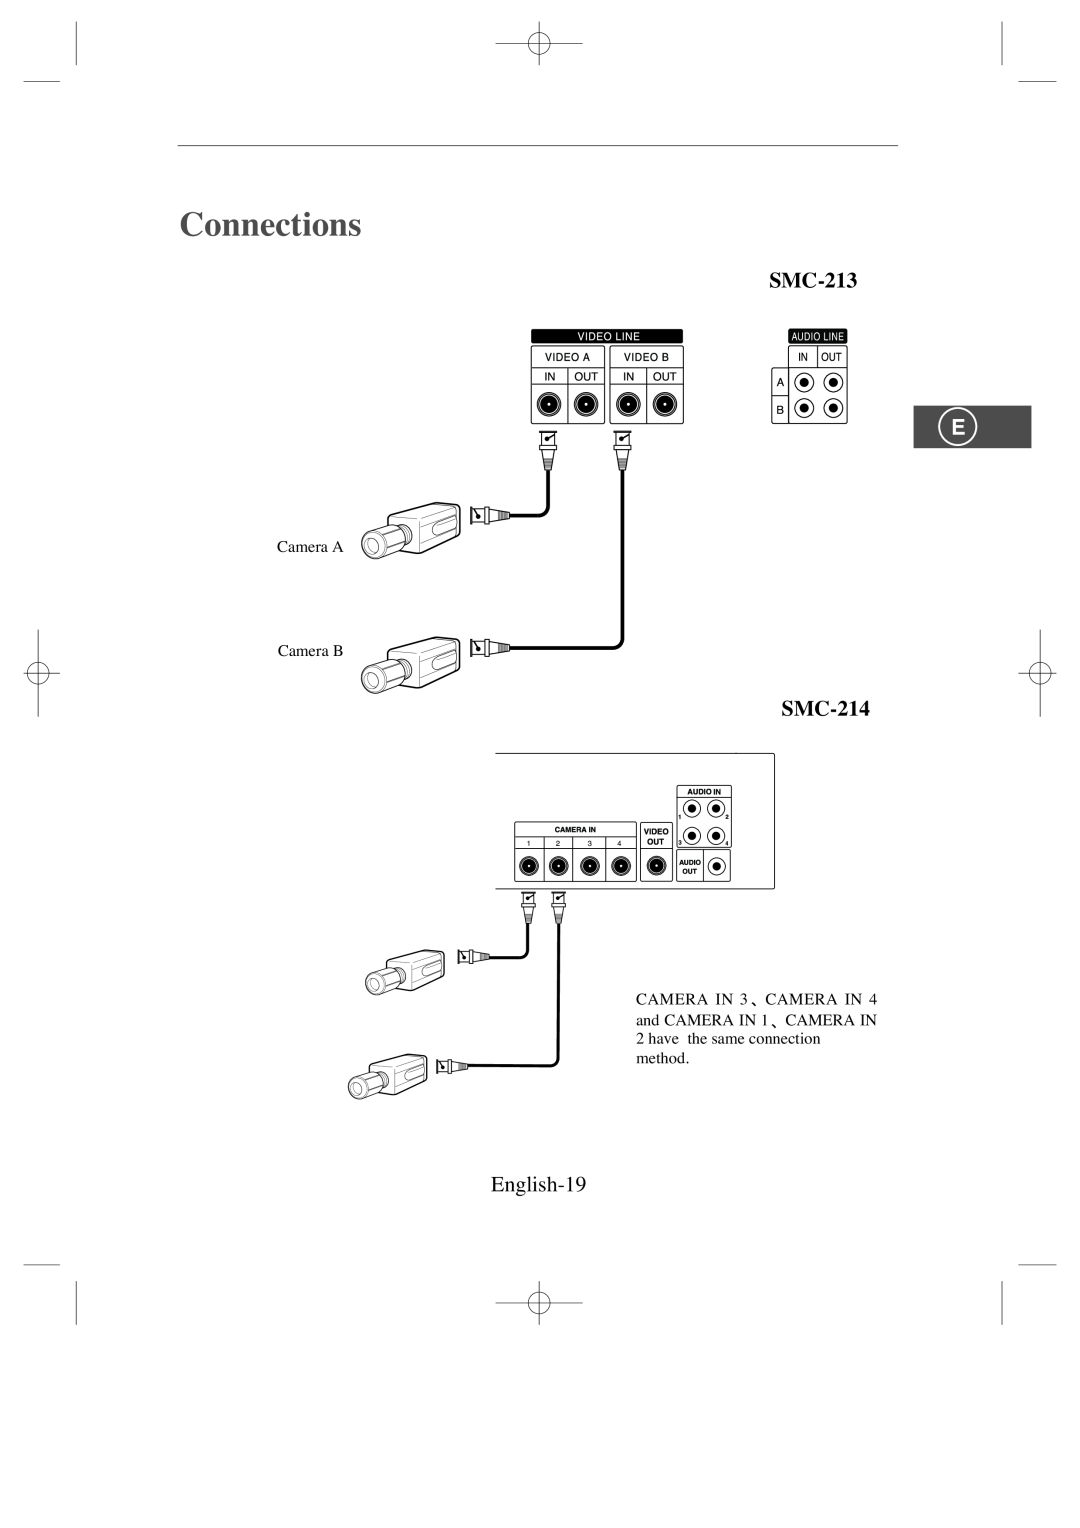 Samsung SMC-214 U manual Connections, SMC-213, English-19 